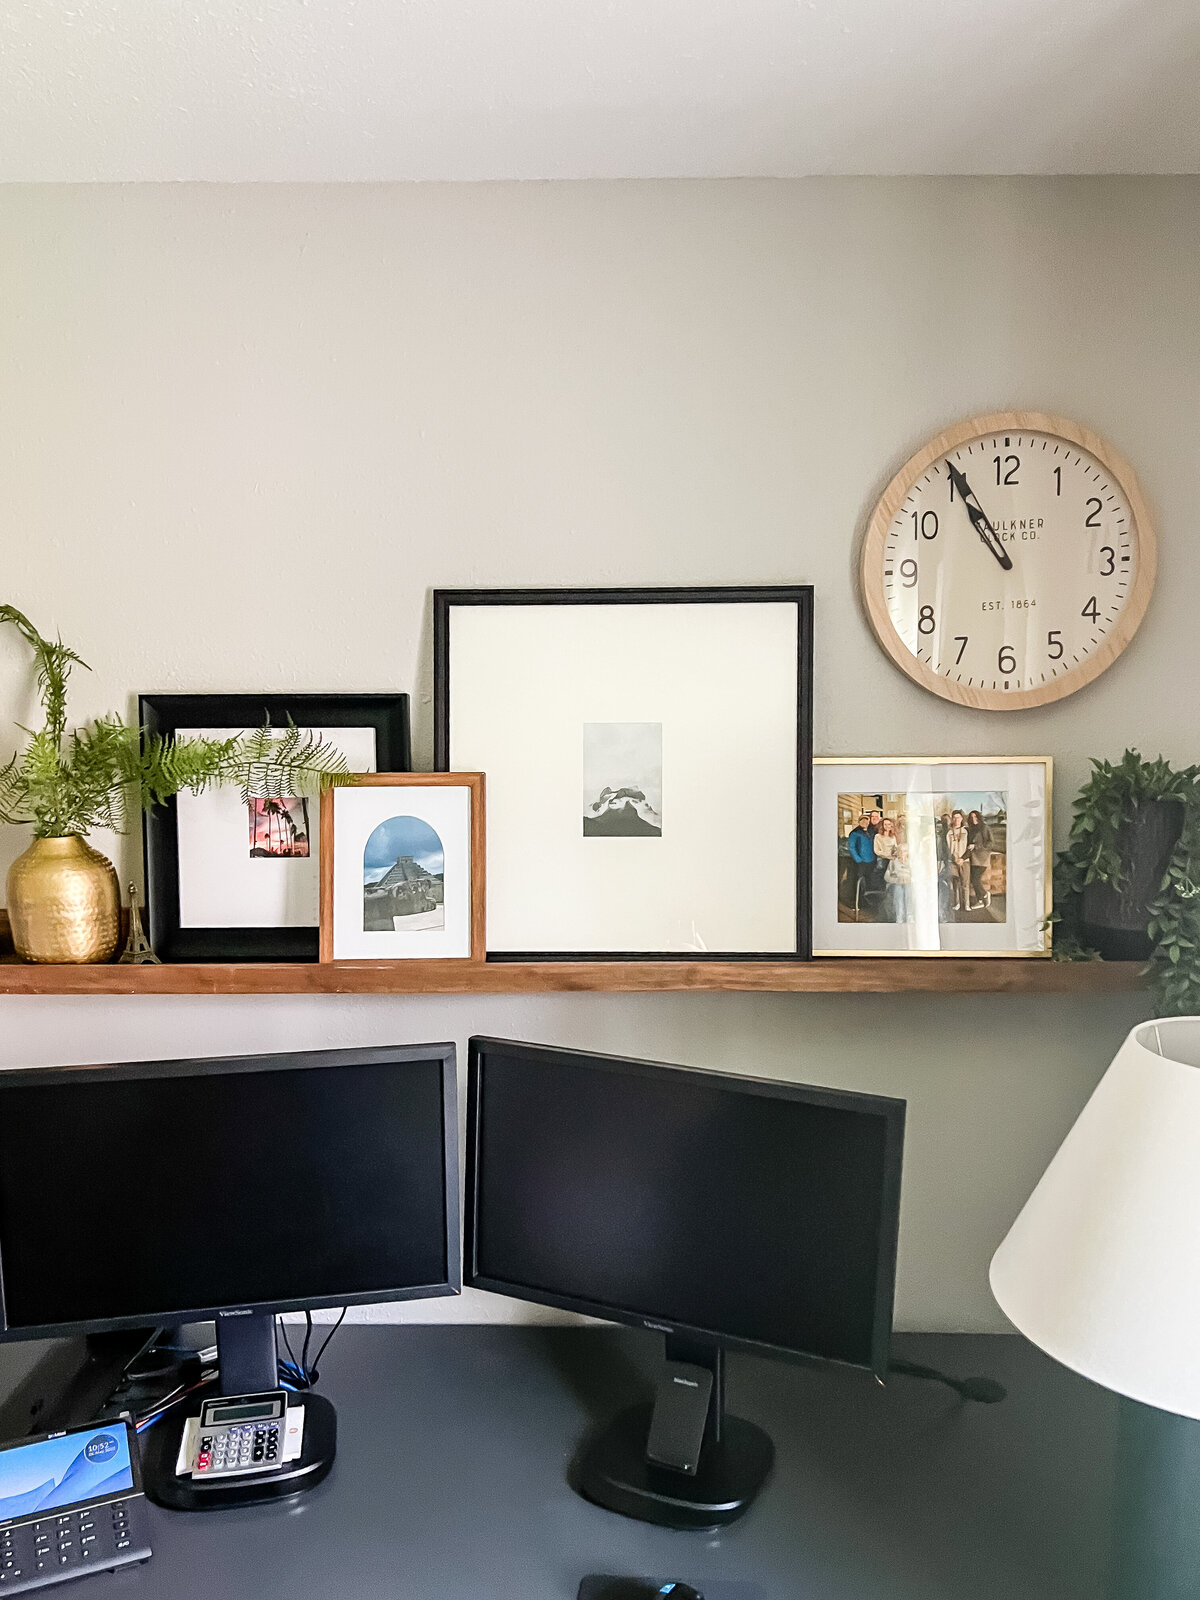 An open shelf displays several framed photos above a home office desk